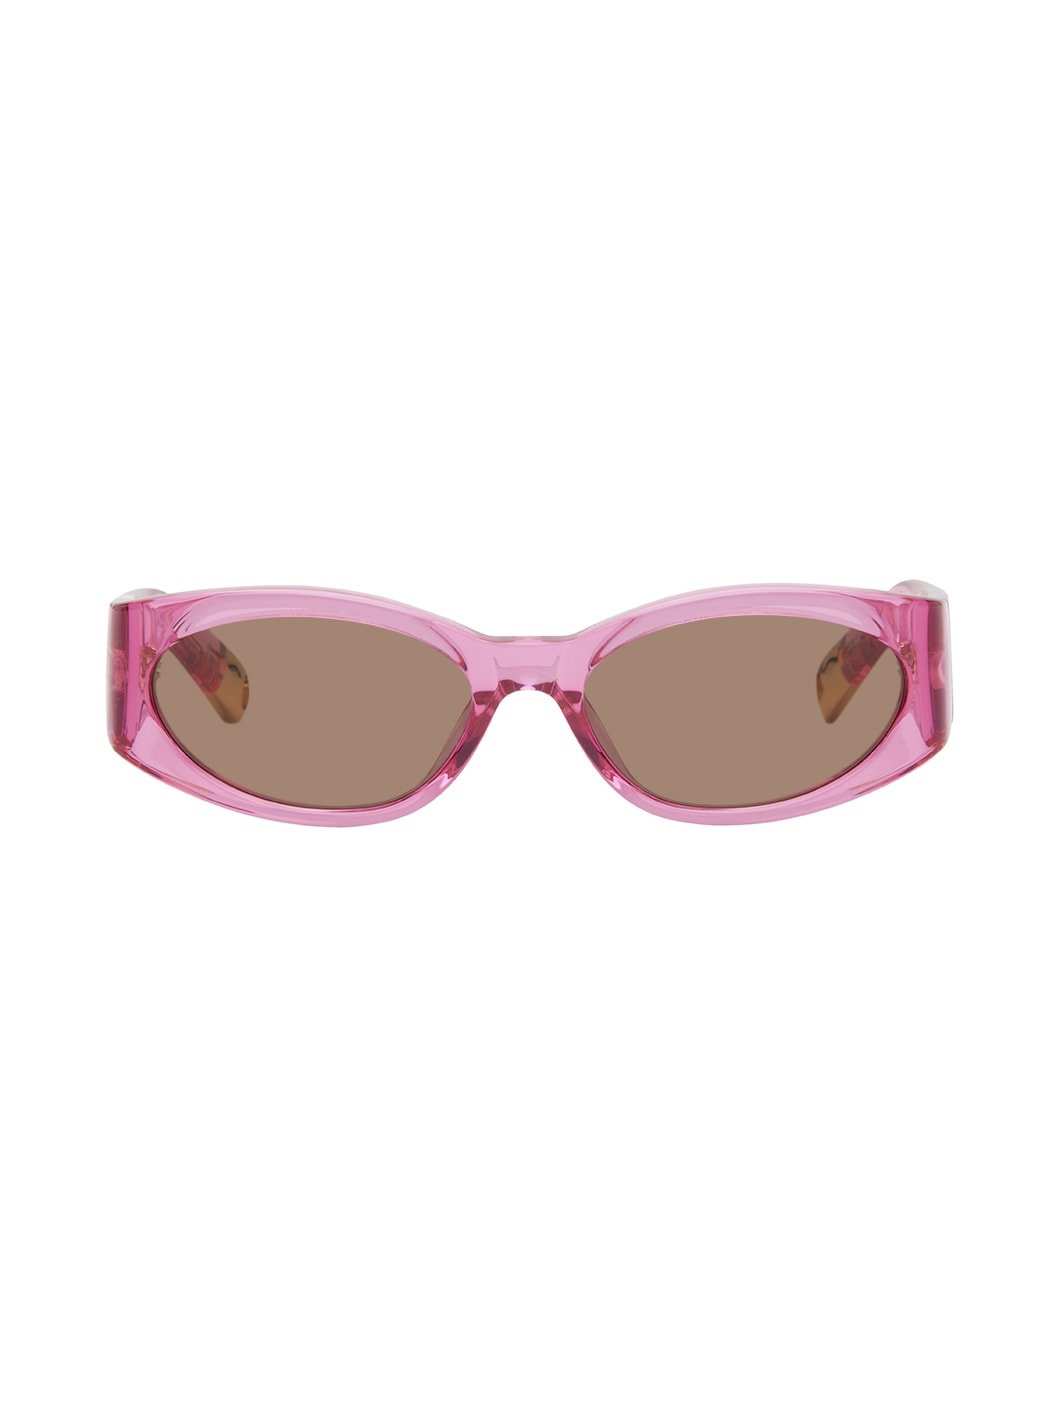 SSENSE Exclusive Pink 'Les Lunettes Ovalo' Sunglasses - 1